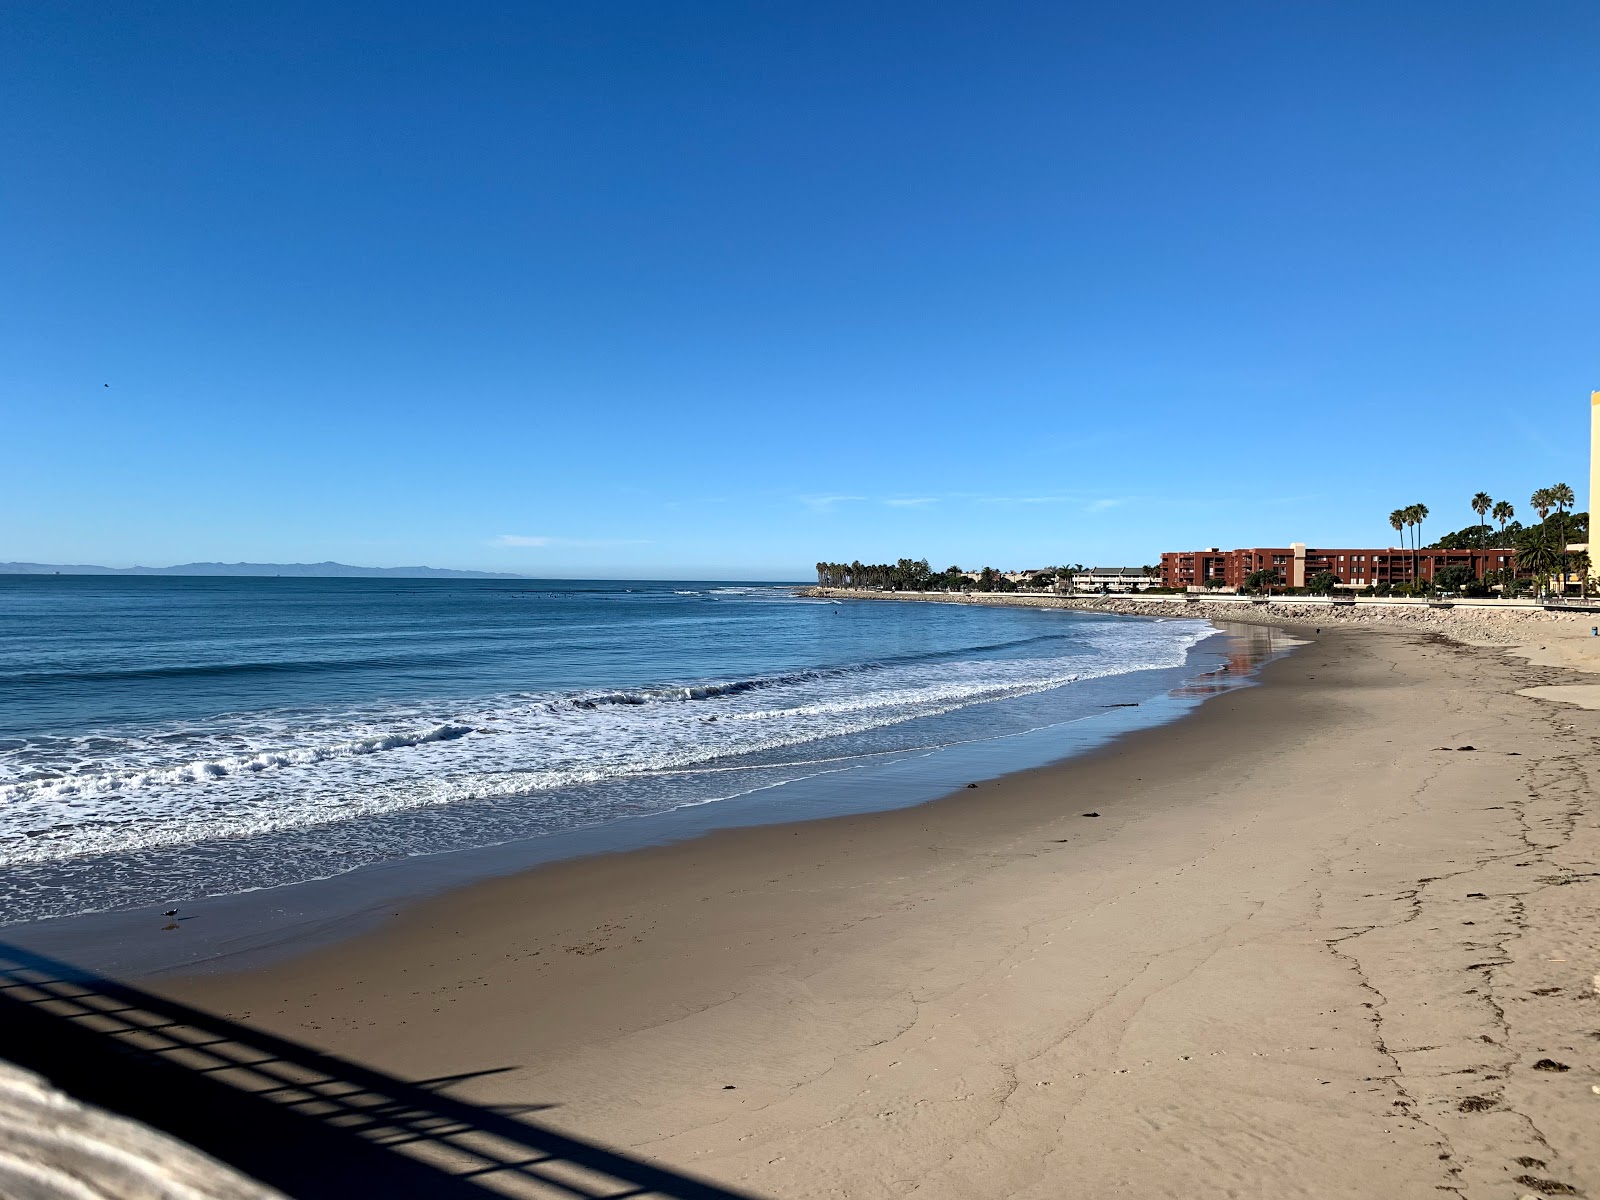 Fotografie cu Ventura Beach cu nivelul de curățenie in medie